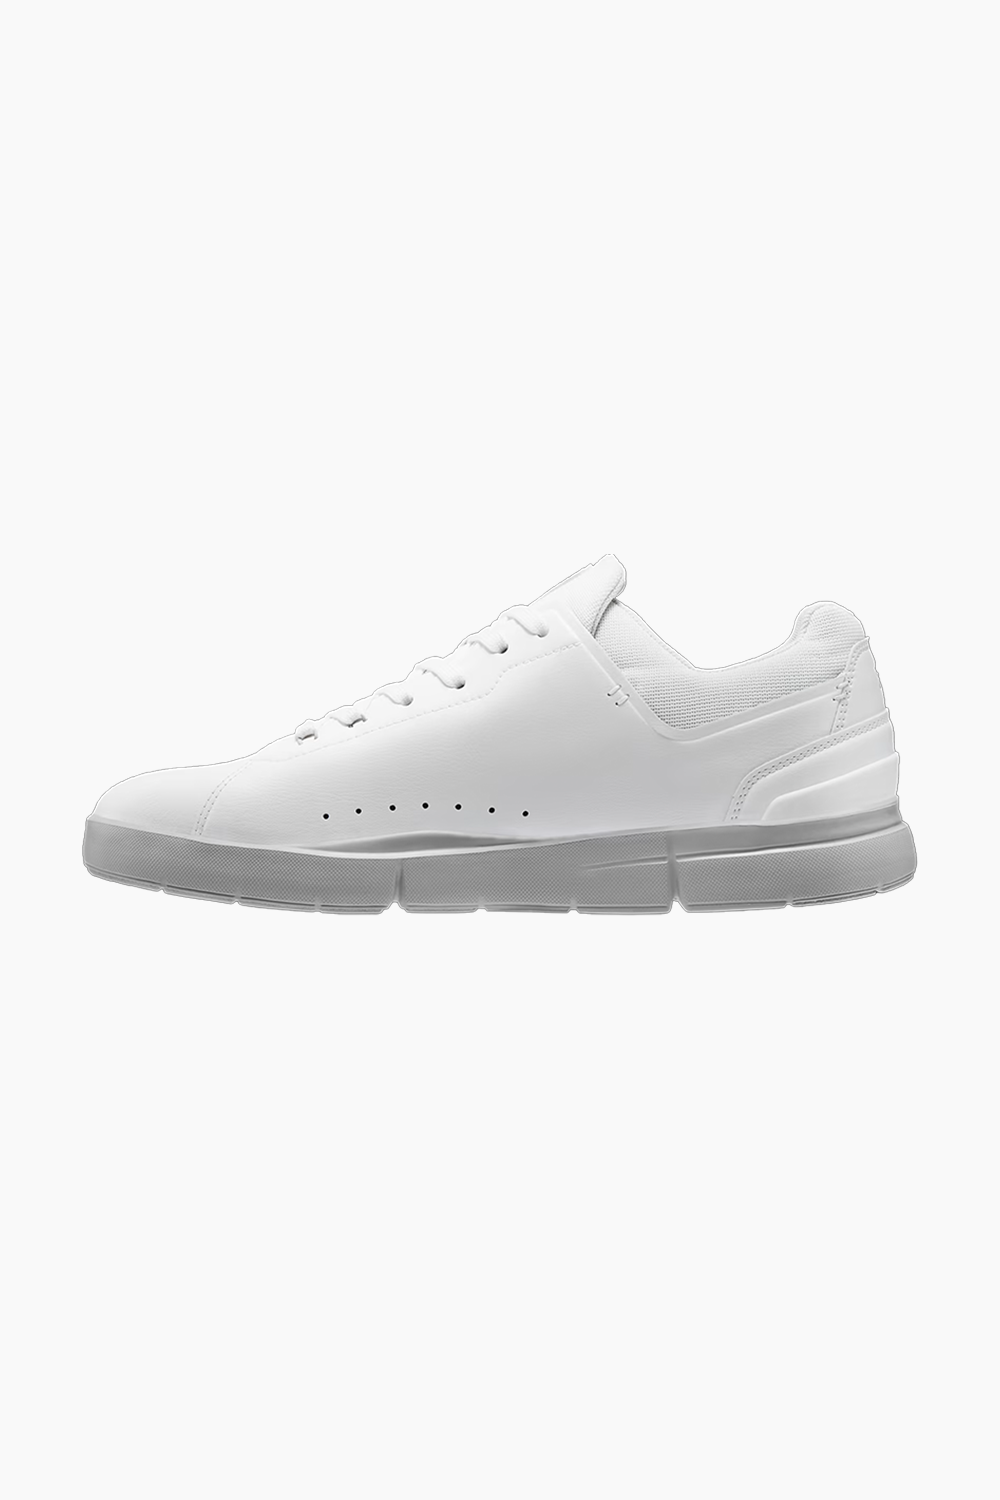 ON | Men's The Roger Advantage Sneaker in White/Alloy